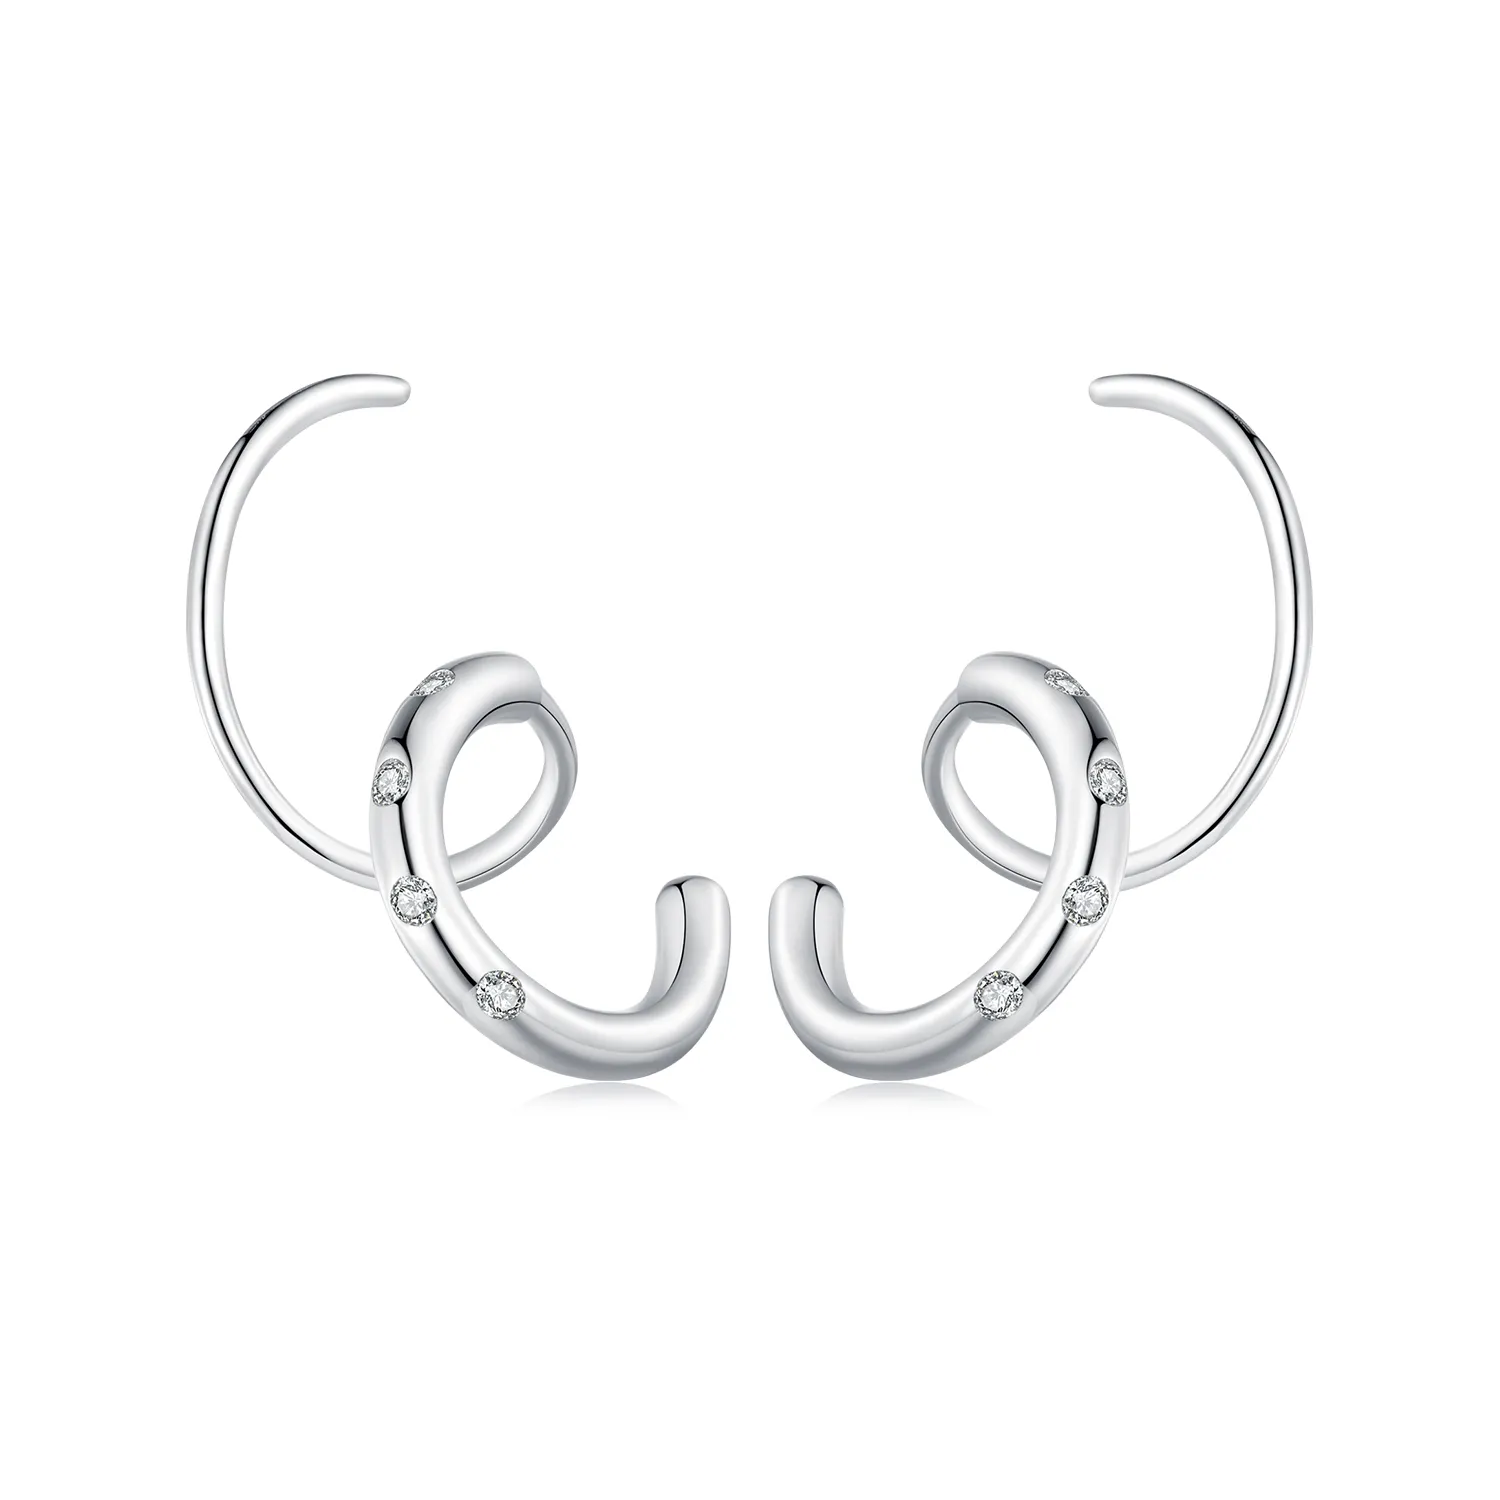 Pandora Style Double Hoop Earrings Stud Earrings - SCE1652